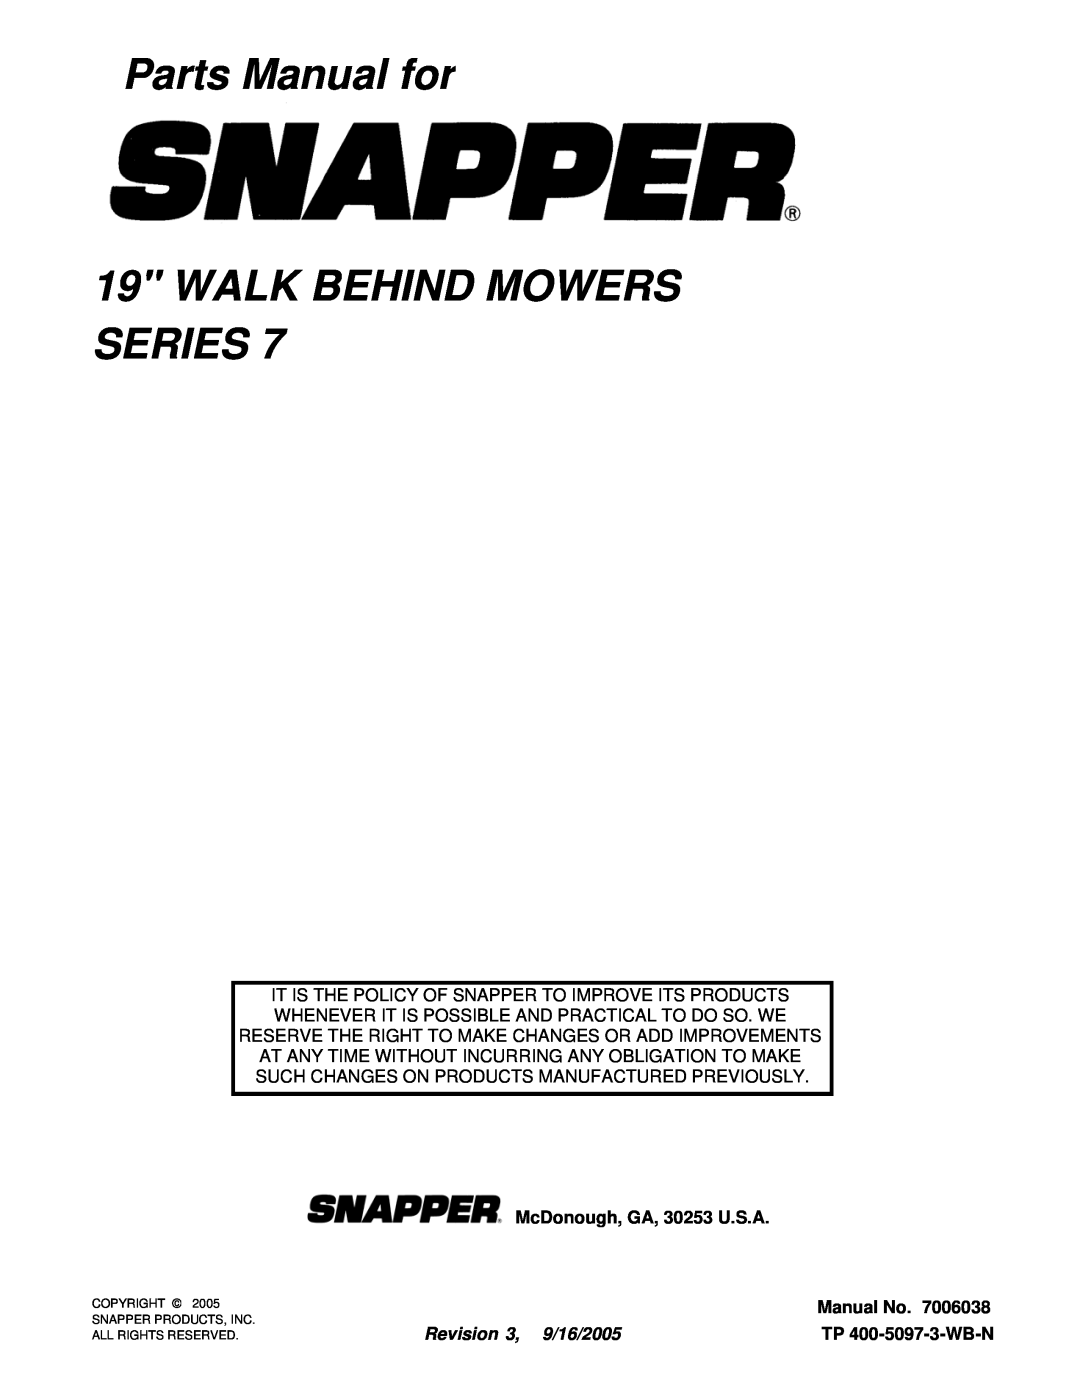 Snapper DLW357B Parts Manual for 19 WALK BEHIND MOWERS SERIES, McDonough, GA, 30253 U.S.A, Manual No, TP 400-5097-3-WB-N 